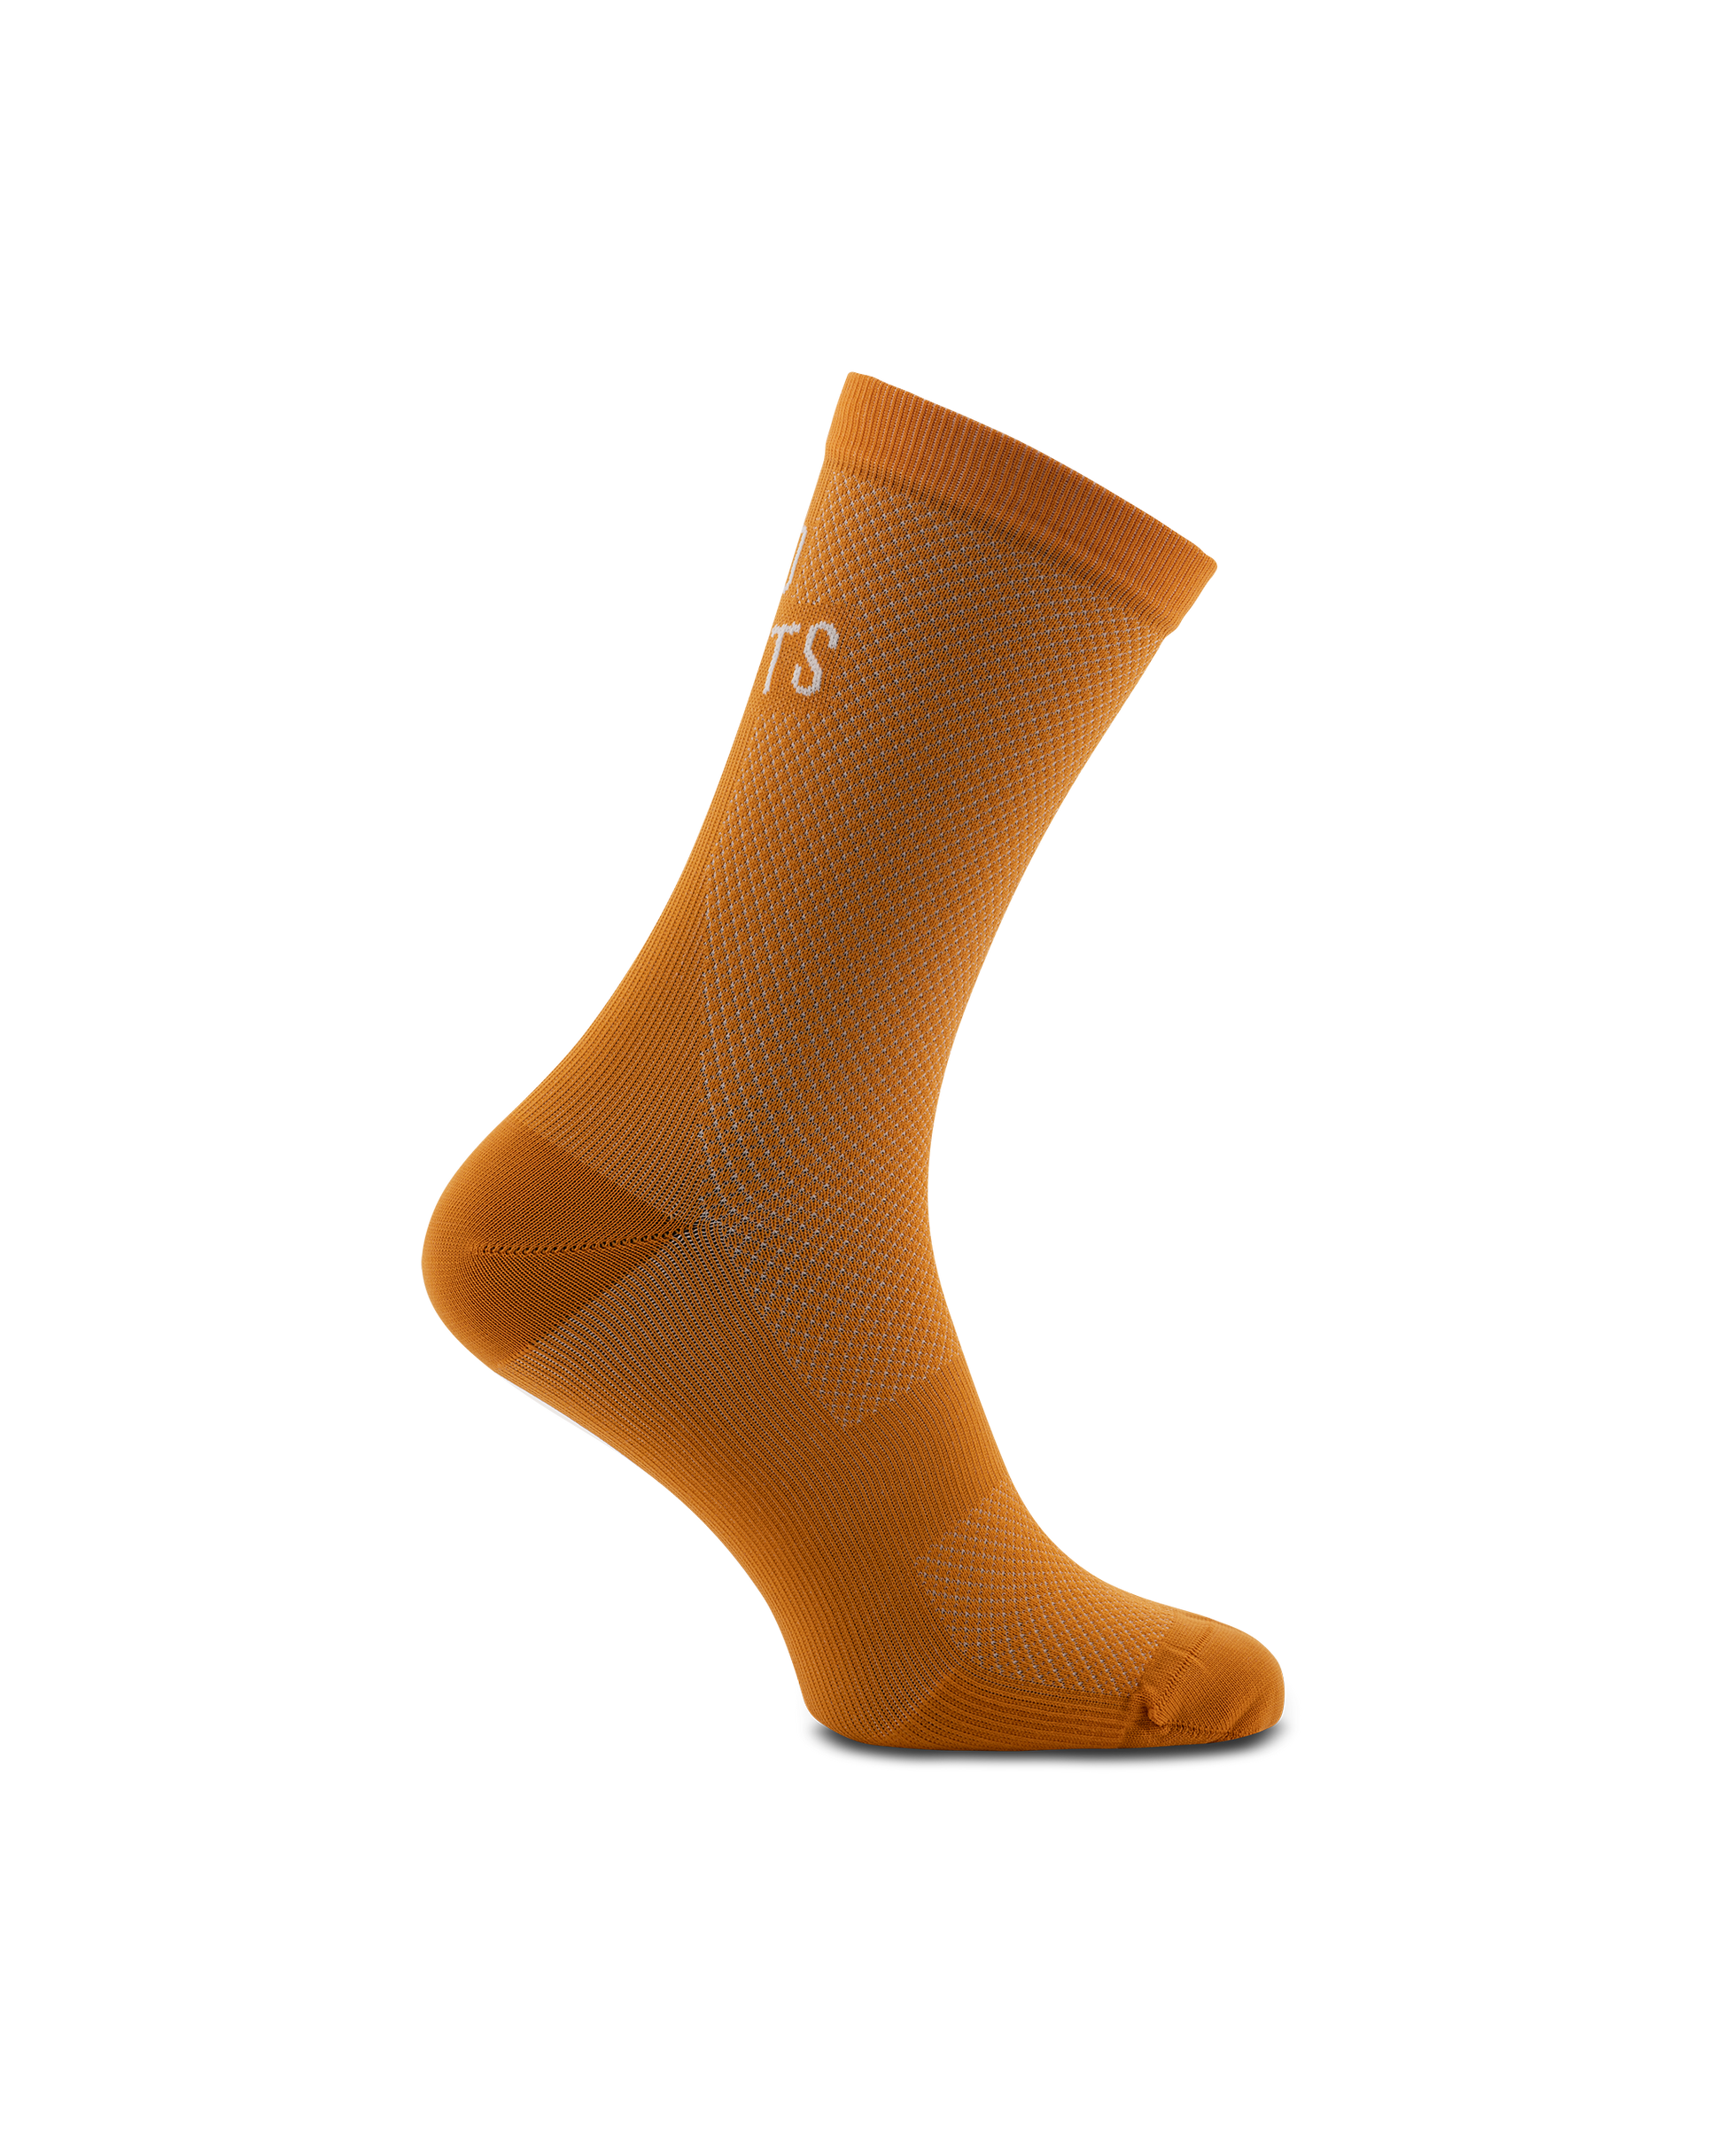 white-orange-la-machine-cycling-socks-3-pack-sockeloen